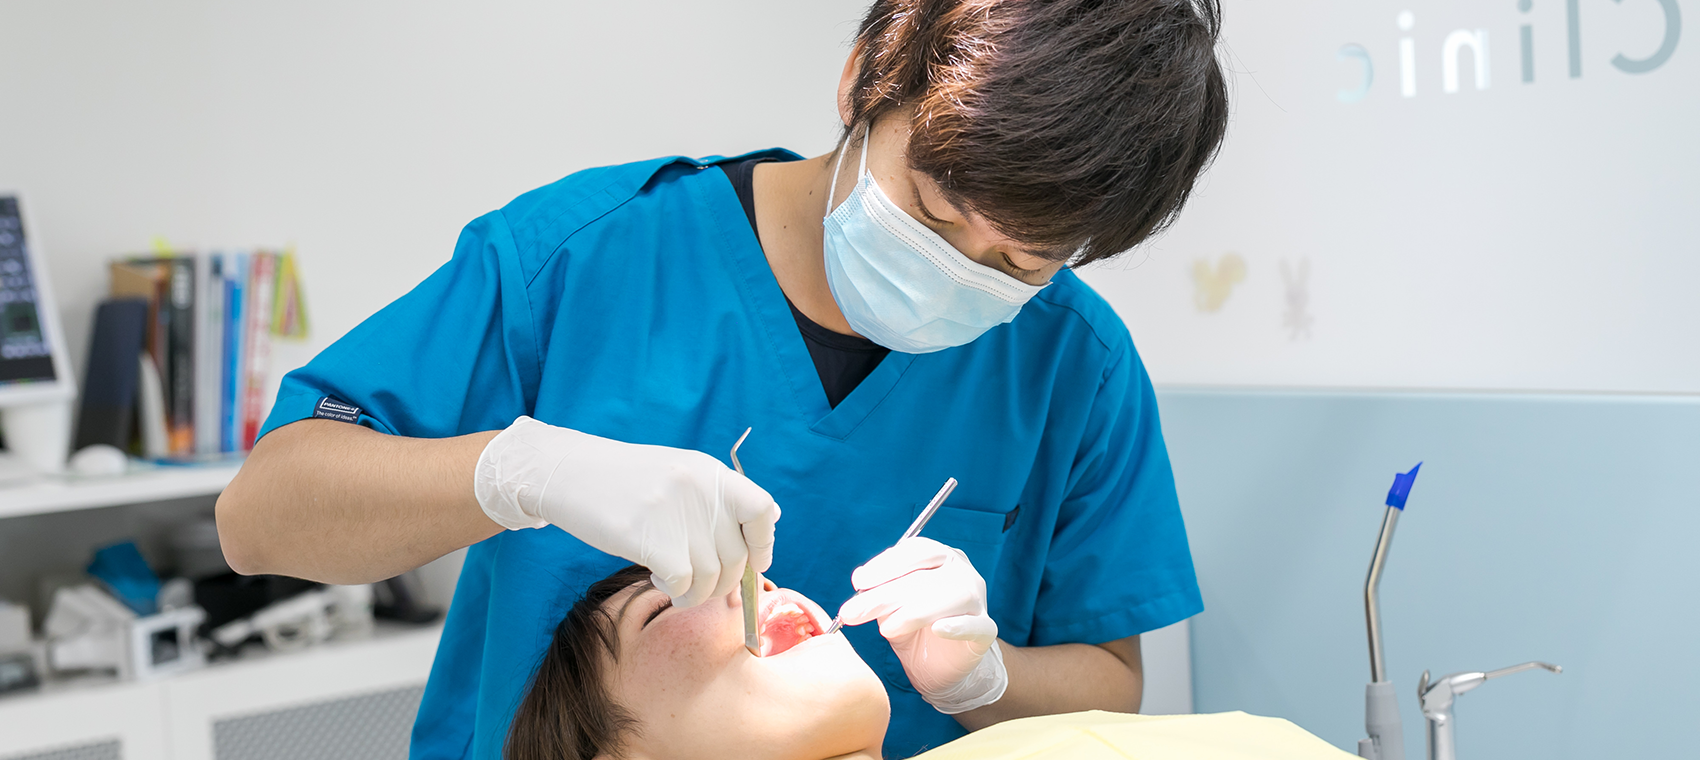 Iroha Dental Clinic こどもとおとなの歯を守る地域のかかりつけ医